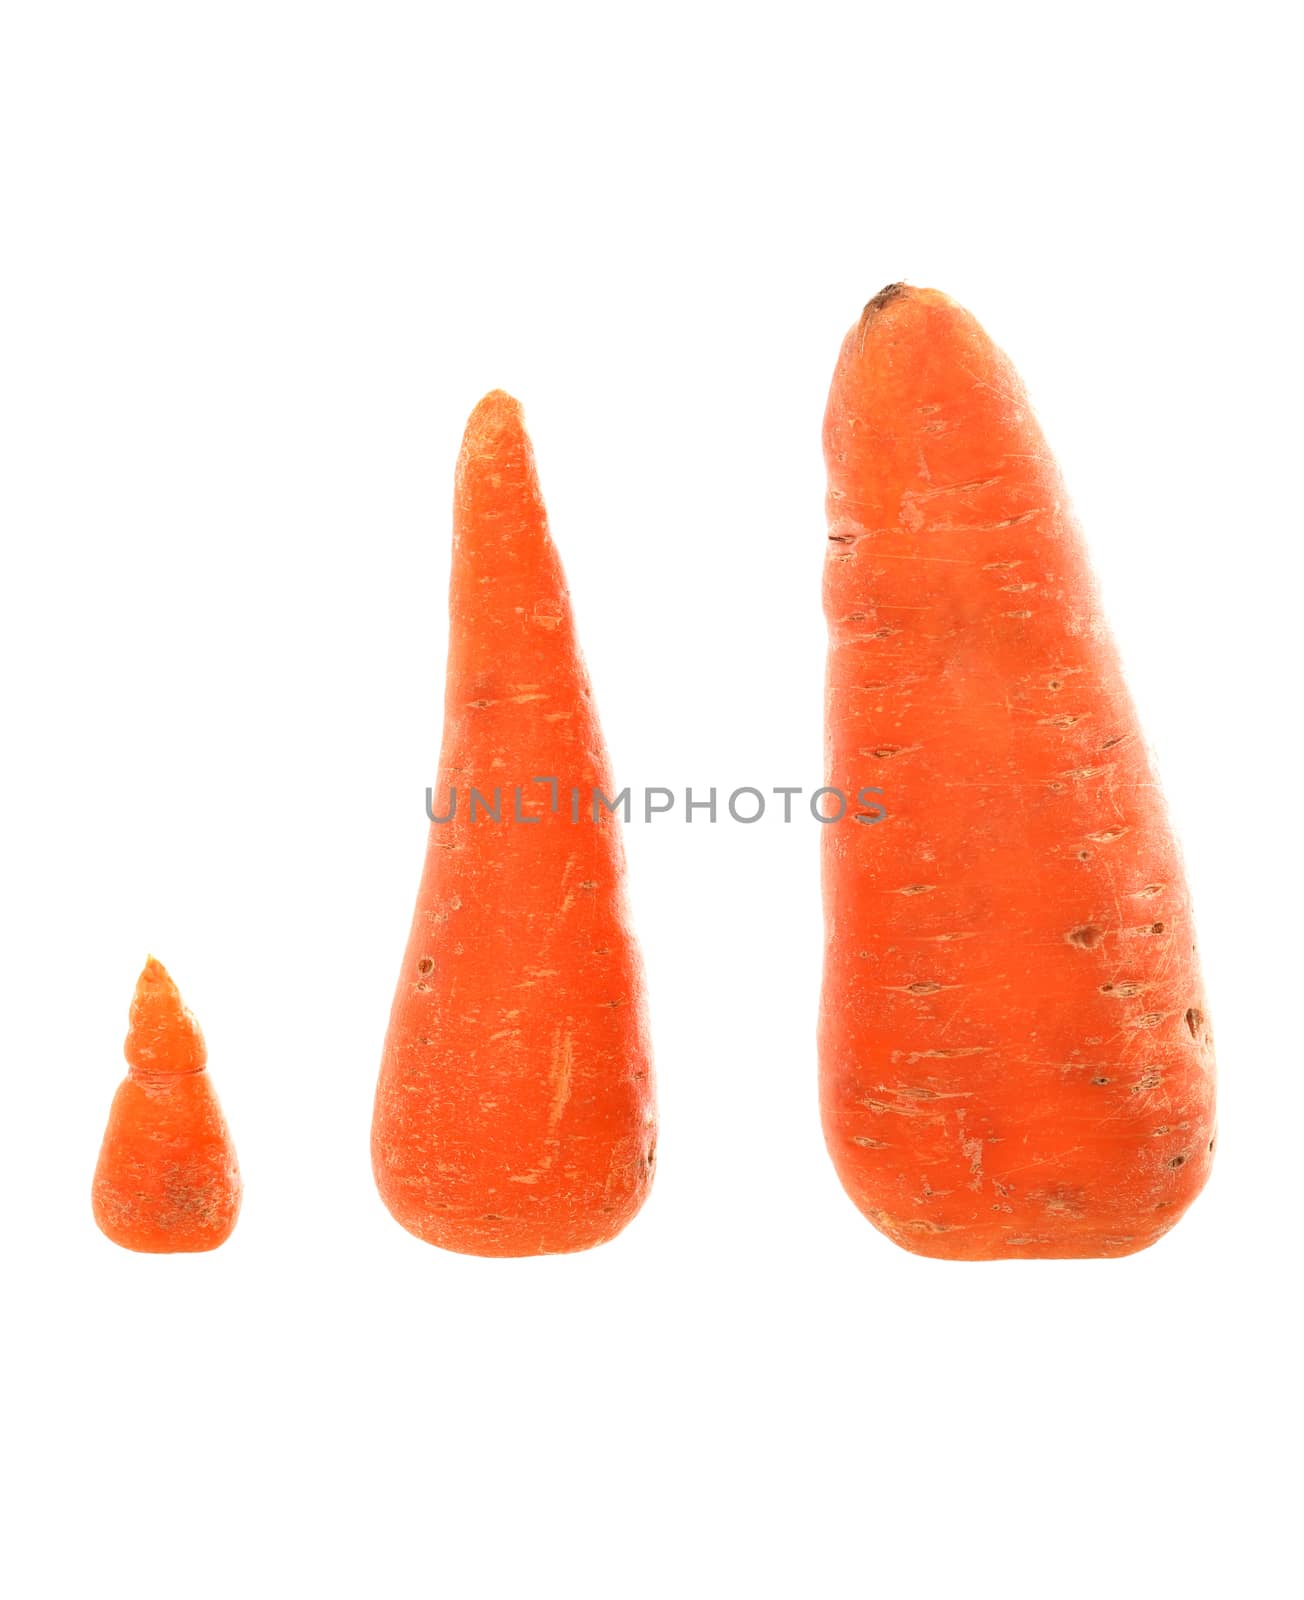 Three Raw Carrots by kvkirillov